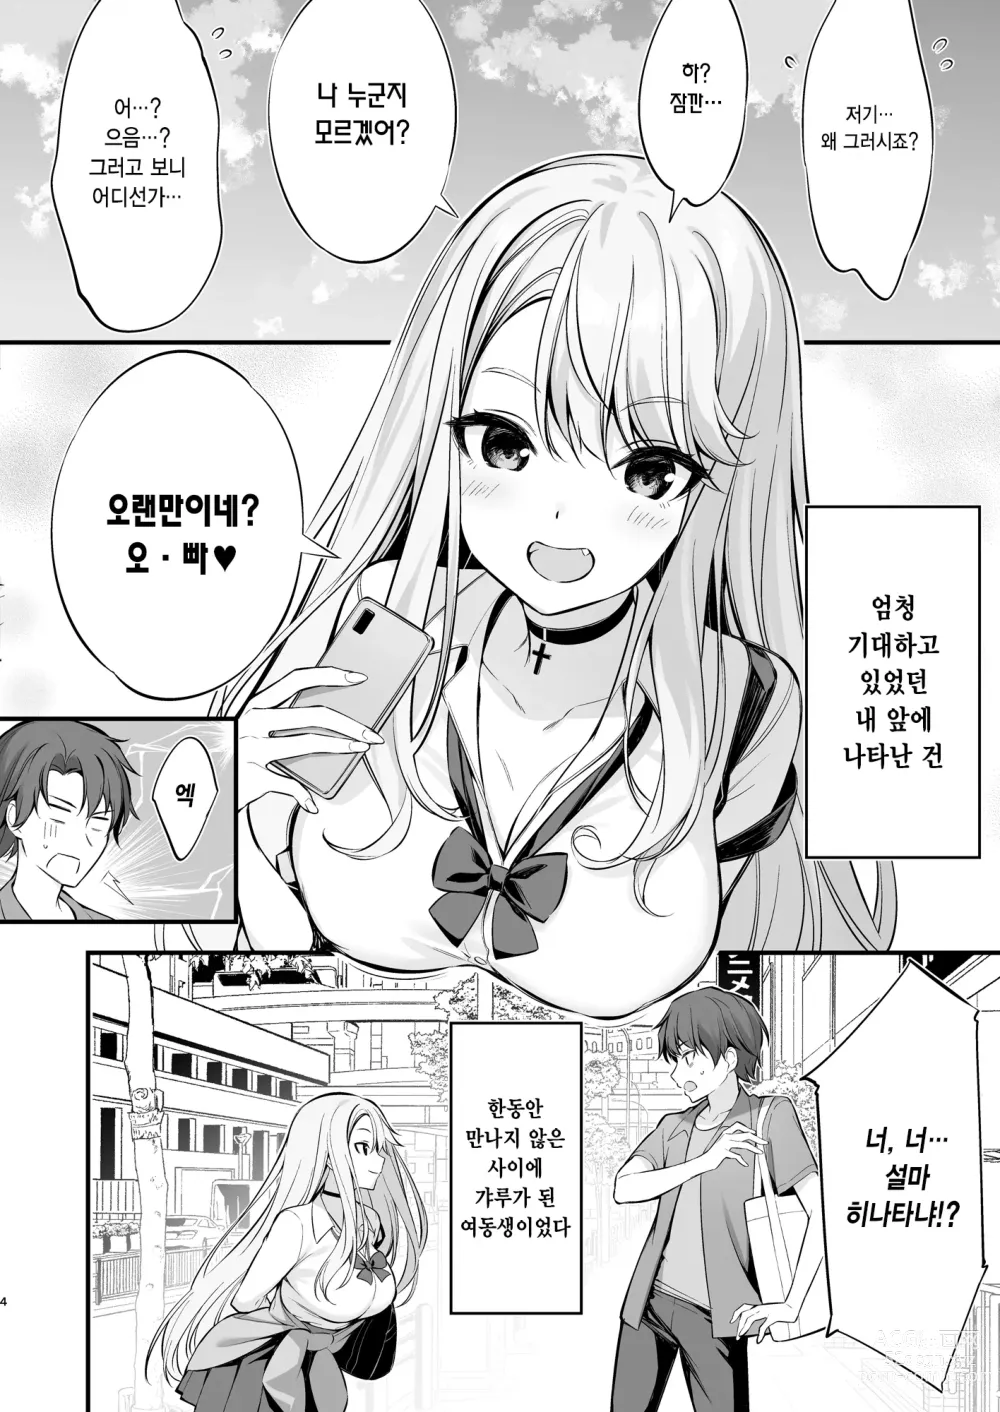 Page 3 of doujinshi SNS를 통해 만난 사람은 갸루가 된 여동생이었다